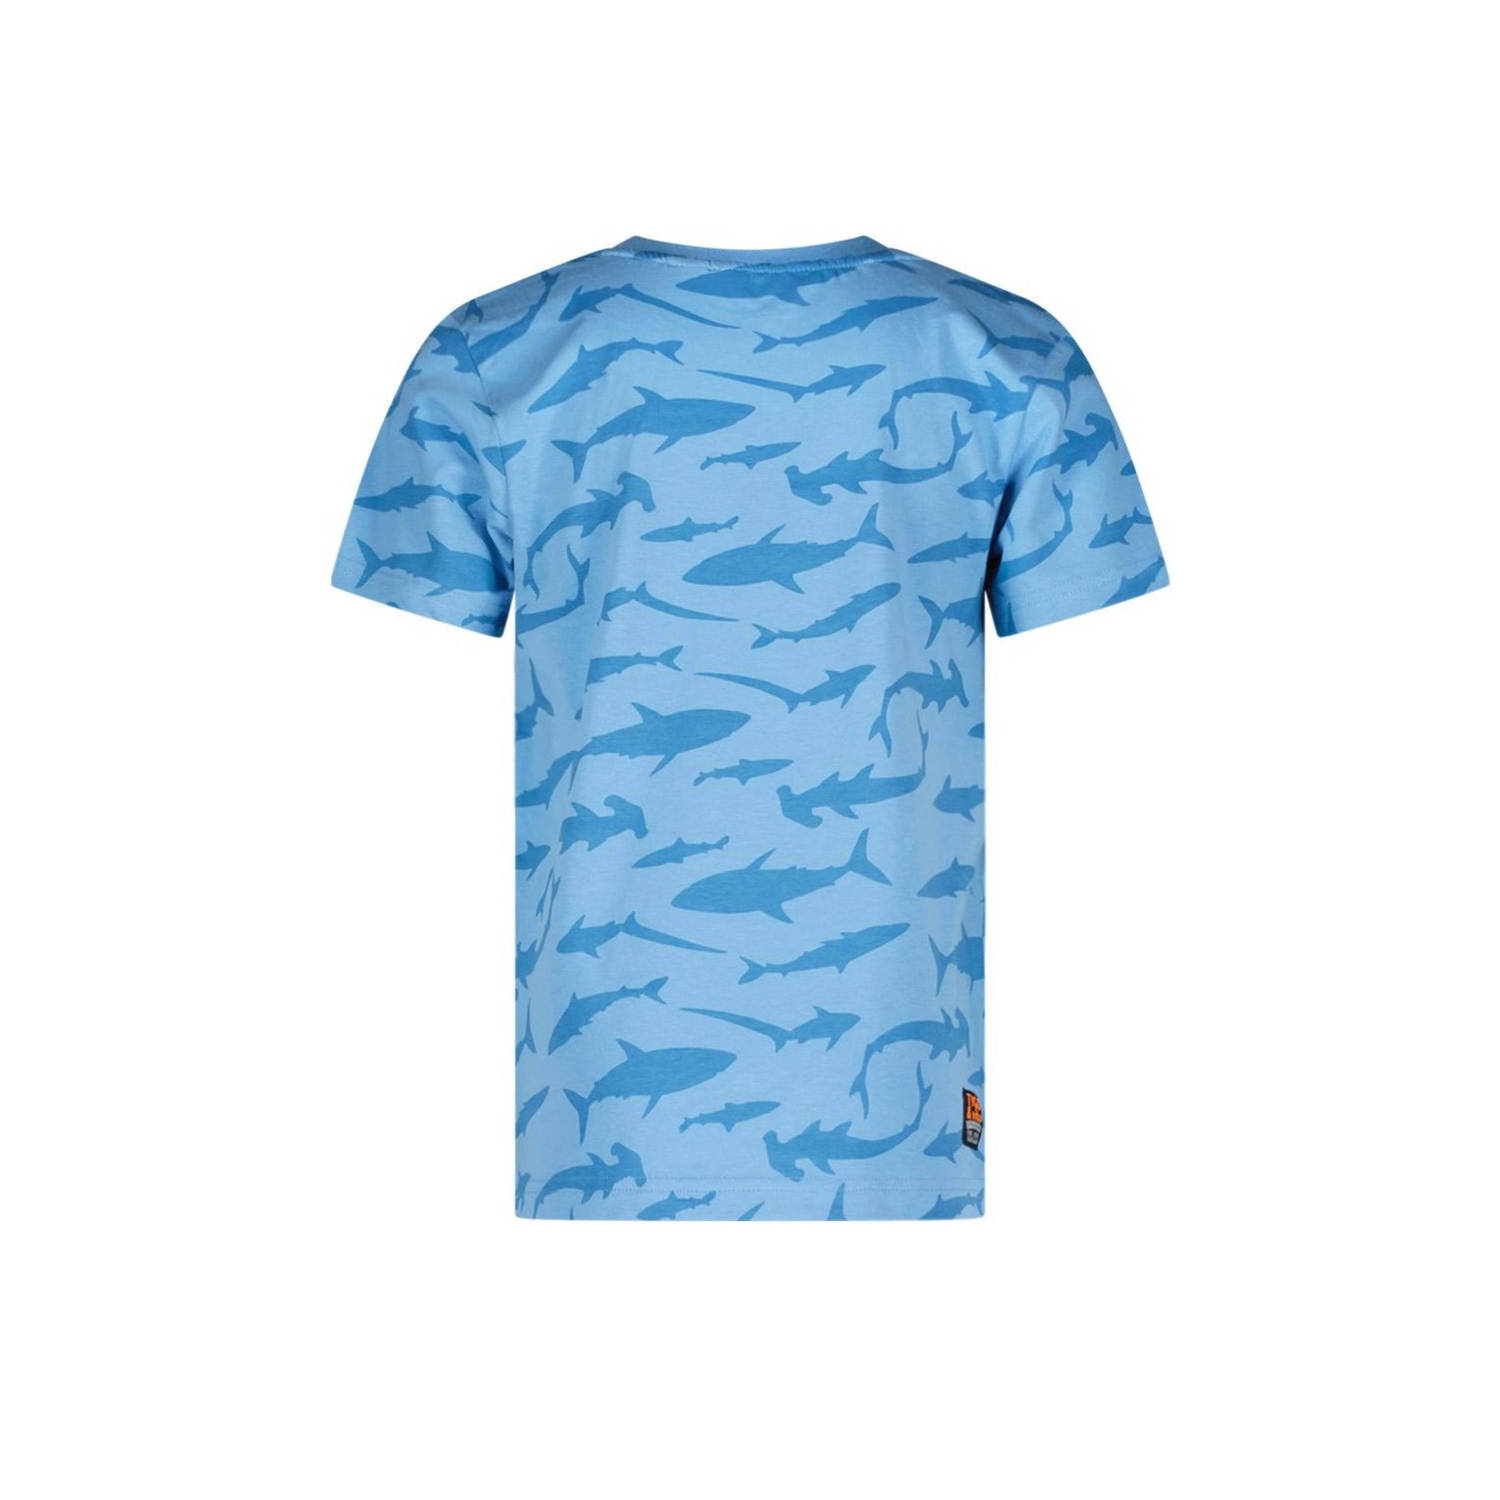 TYGO & vito T-shirt Thijs met all over print lichtblauw